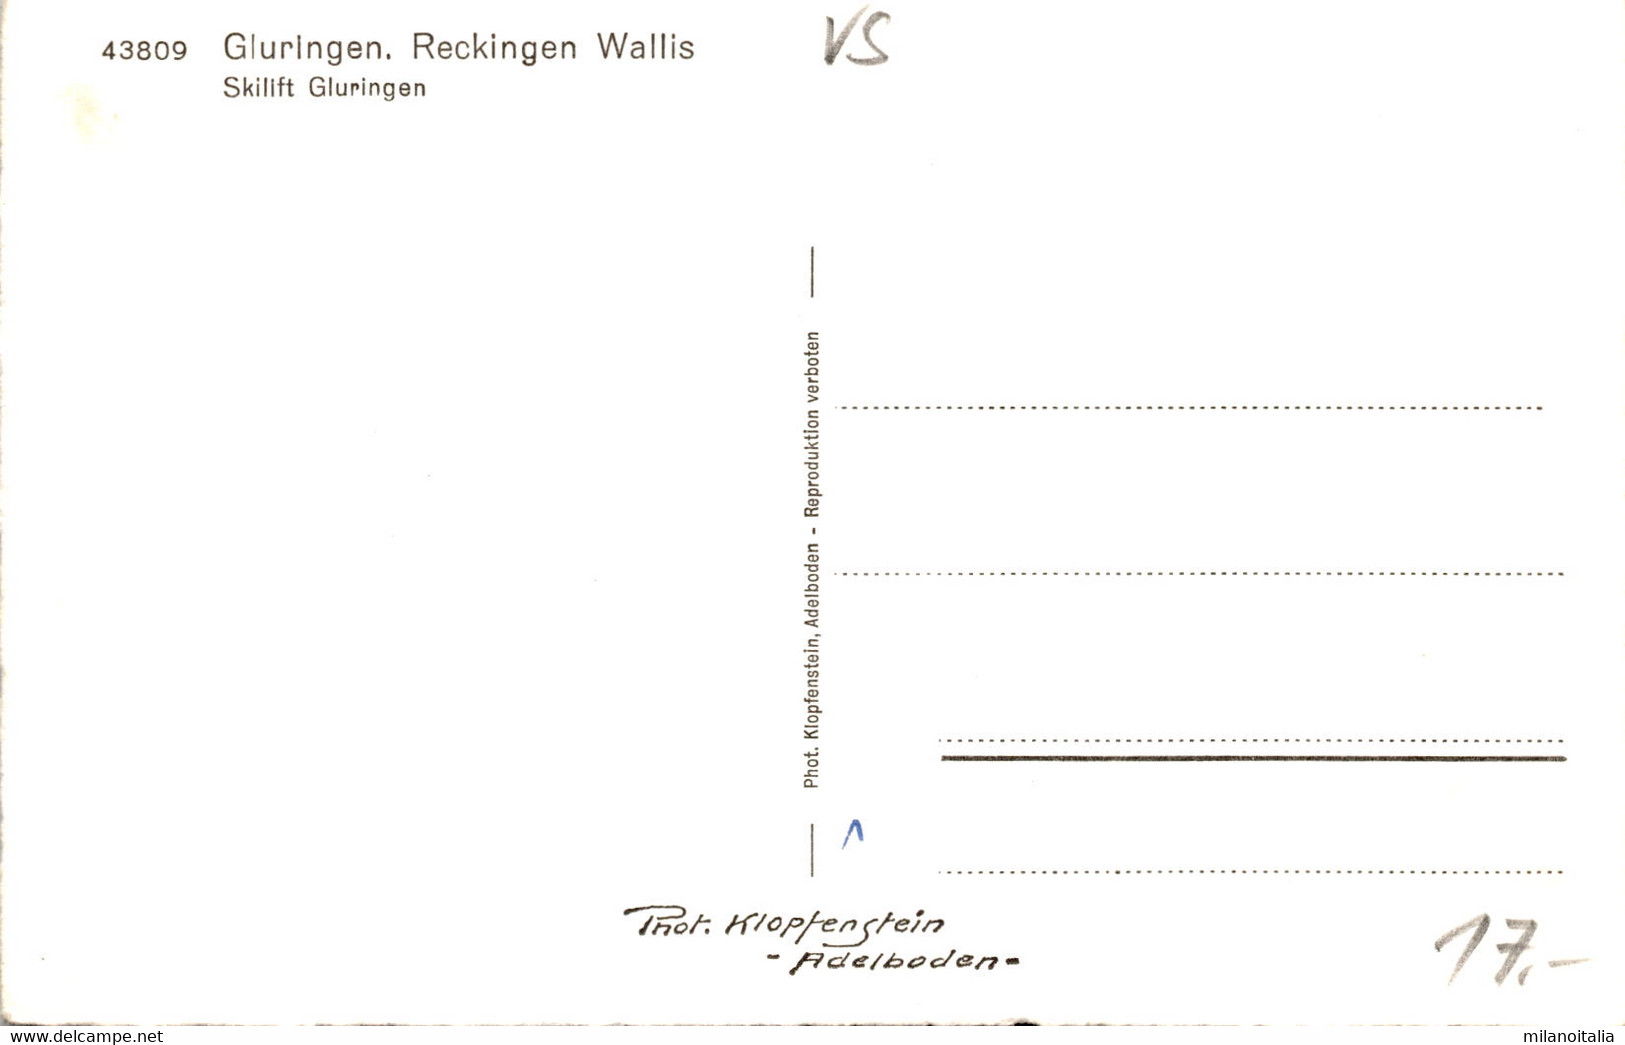 Gluringen - Reckingen, Wallis (43809) - Skilift Gluringen - Gluringen